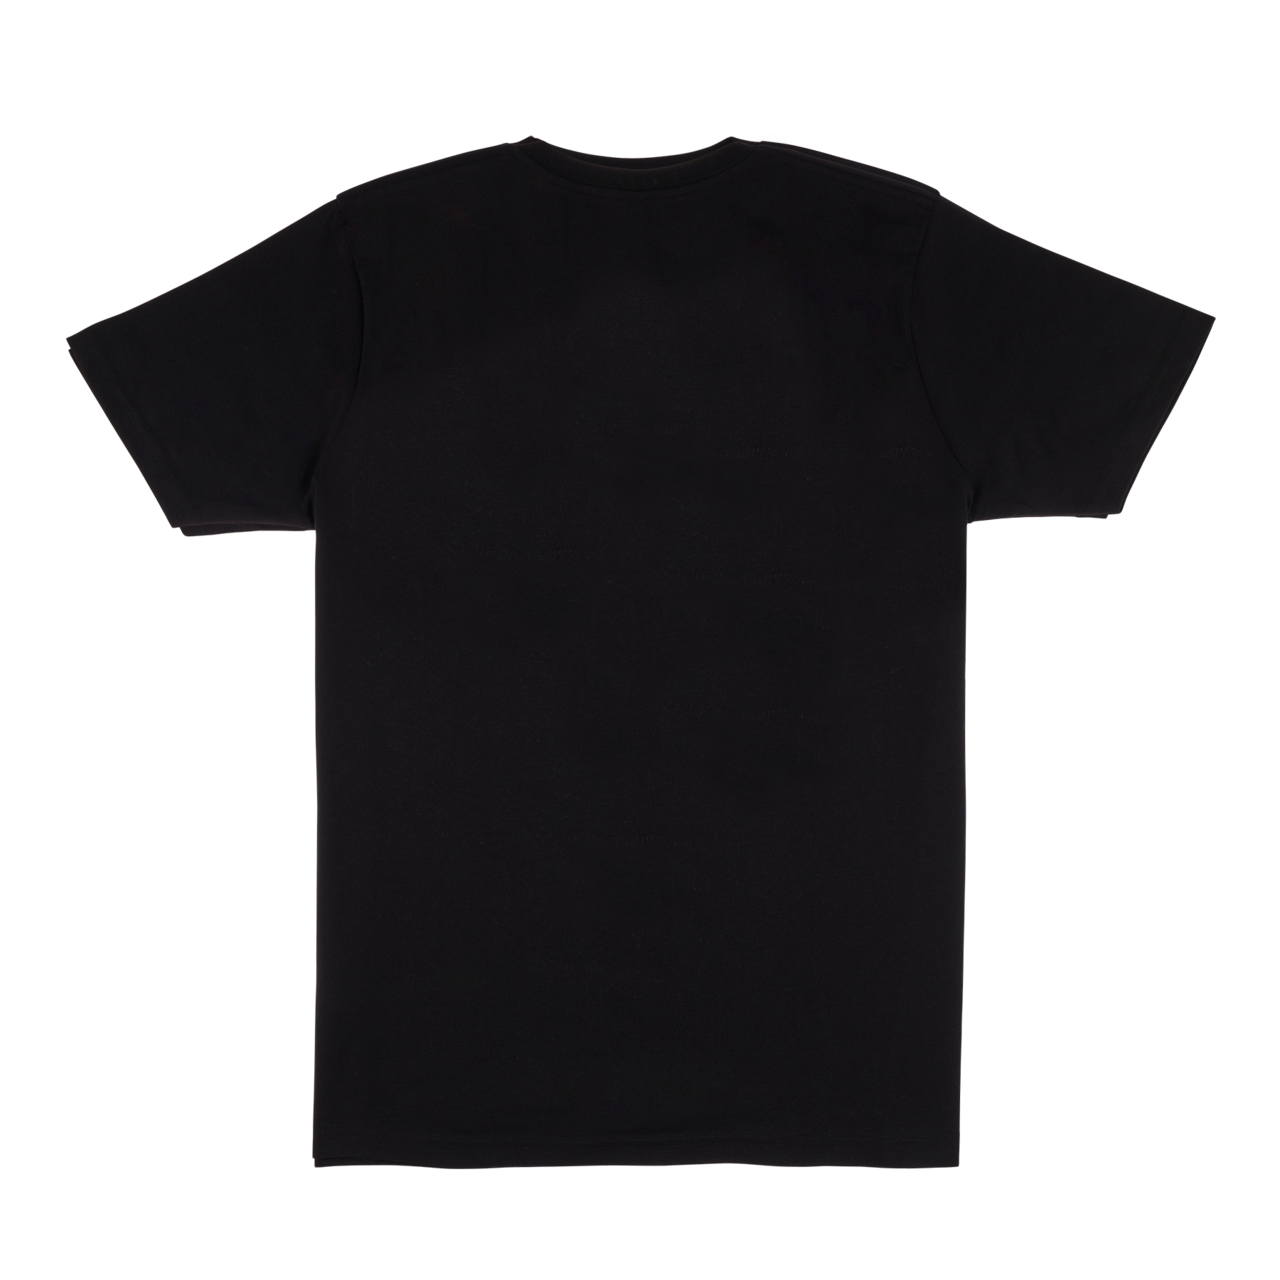 CHAOS - Black Chaos Logo T-Shirt